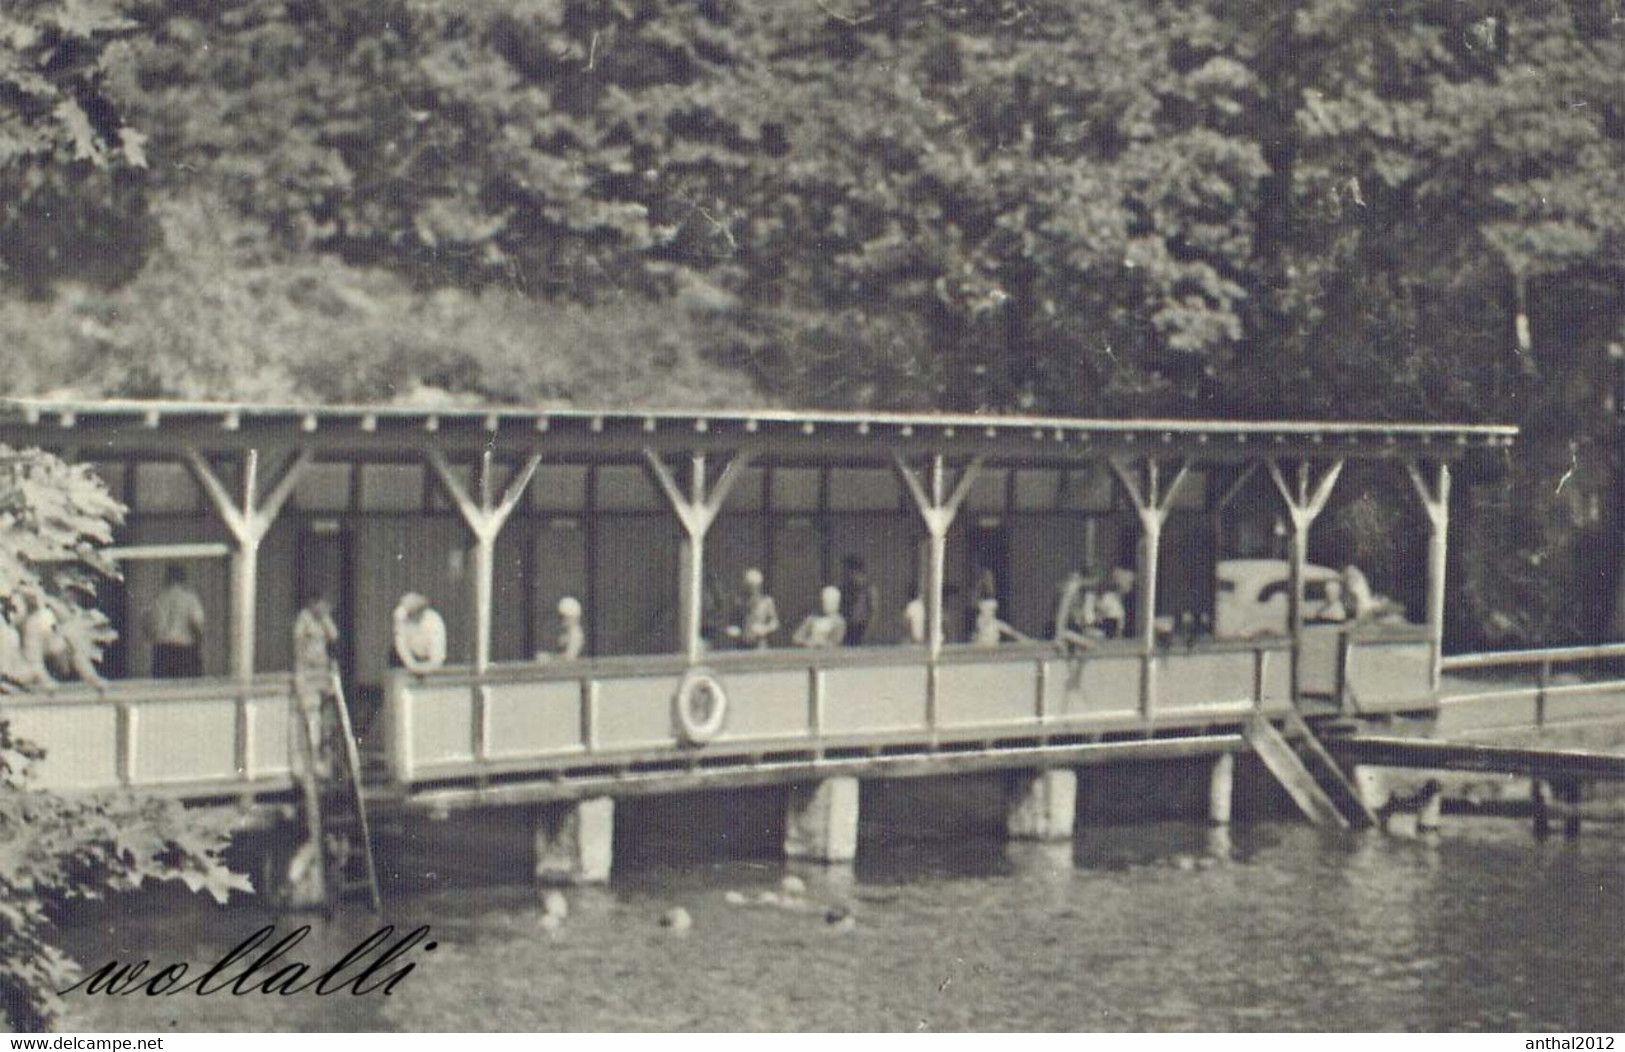 Rarität Schwimmbad Waldbad Holztribüne Altenbrak SA 5.6.1966 A 1/B 381/65 IV-14-45 7/1559 - Altenbrak